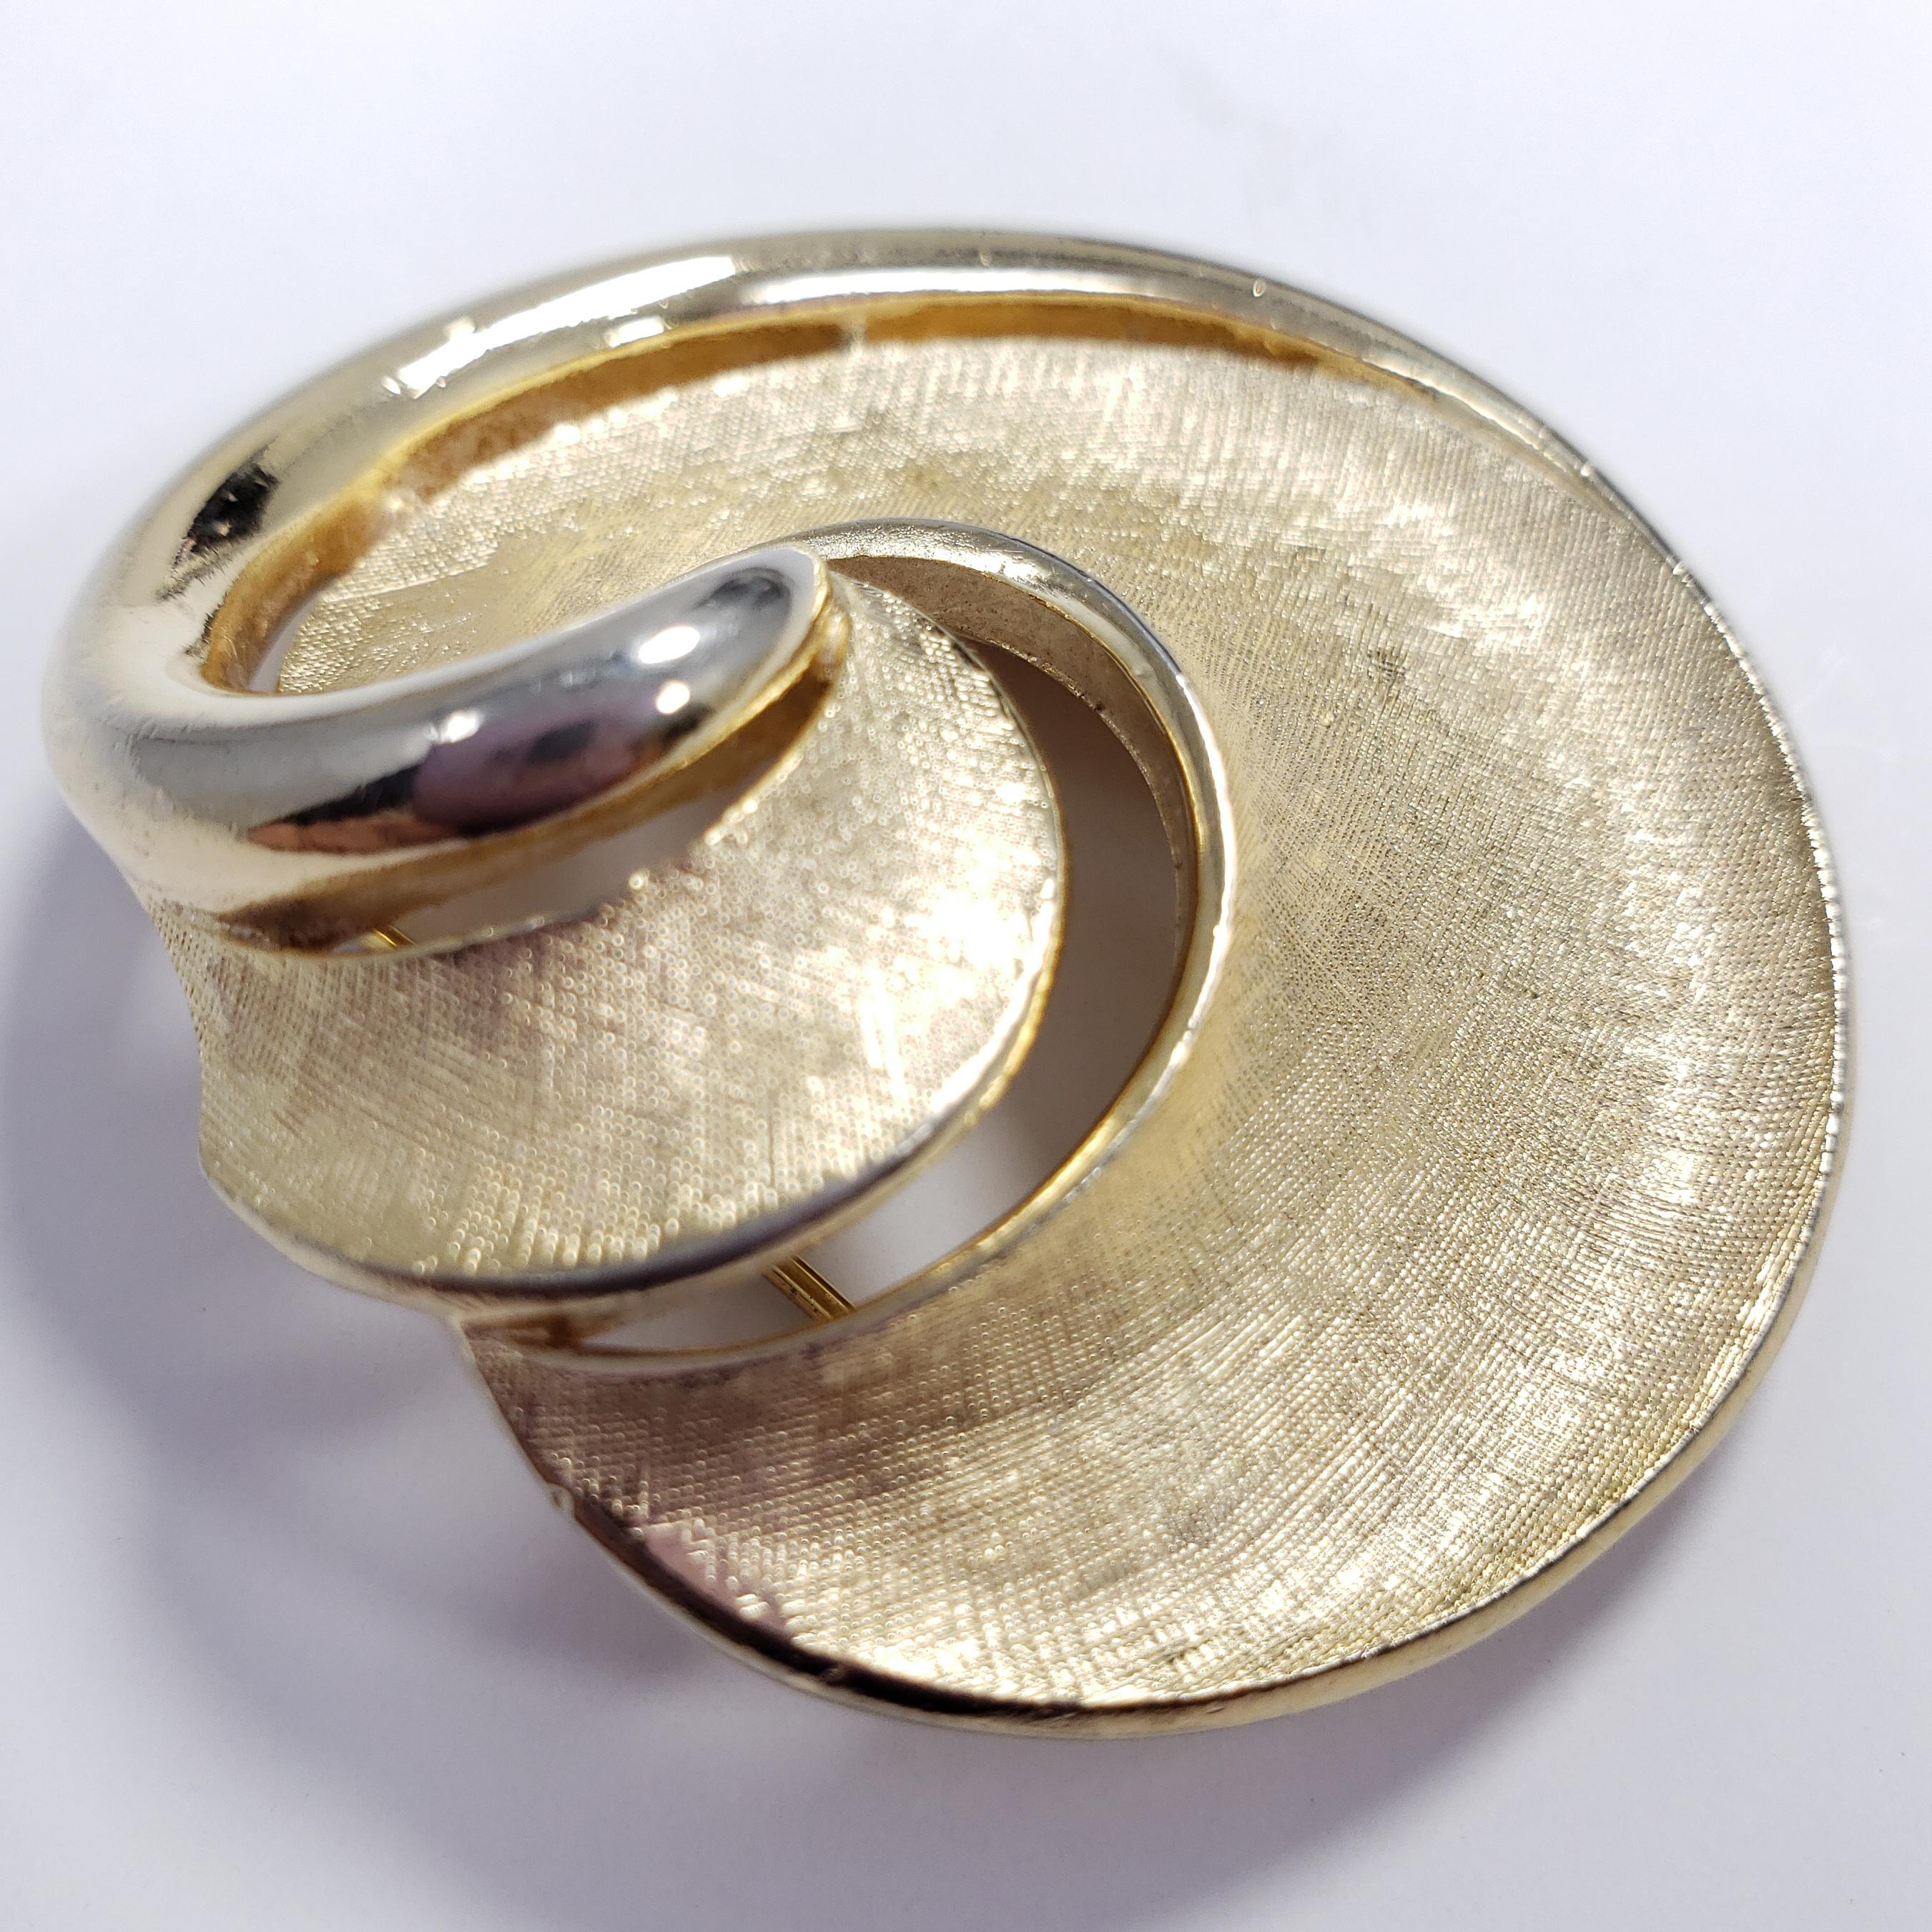 A sophisticated Crown Trifari pin brooch, featuring a textured gold decorative motif in the classic Trifari style.

Hallmarks: Trifari © 